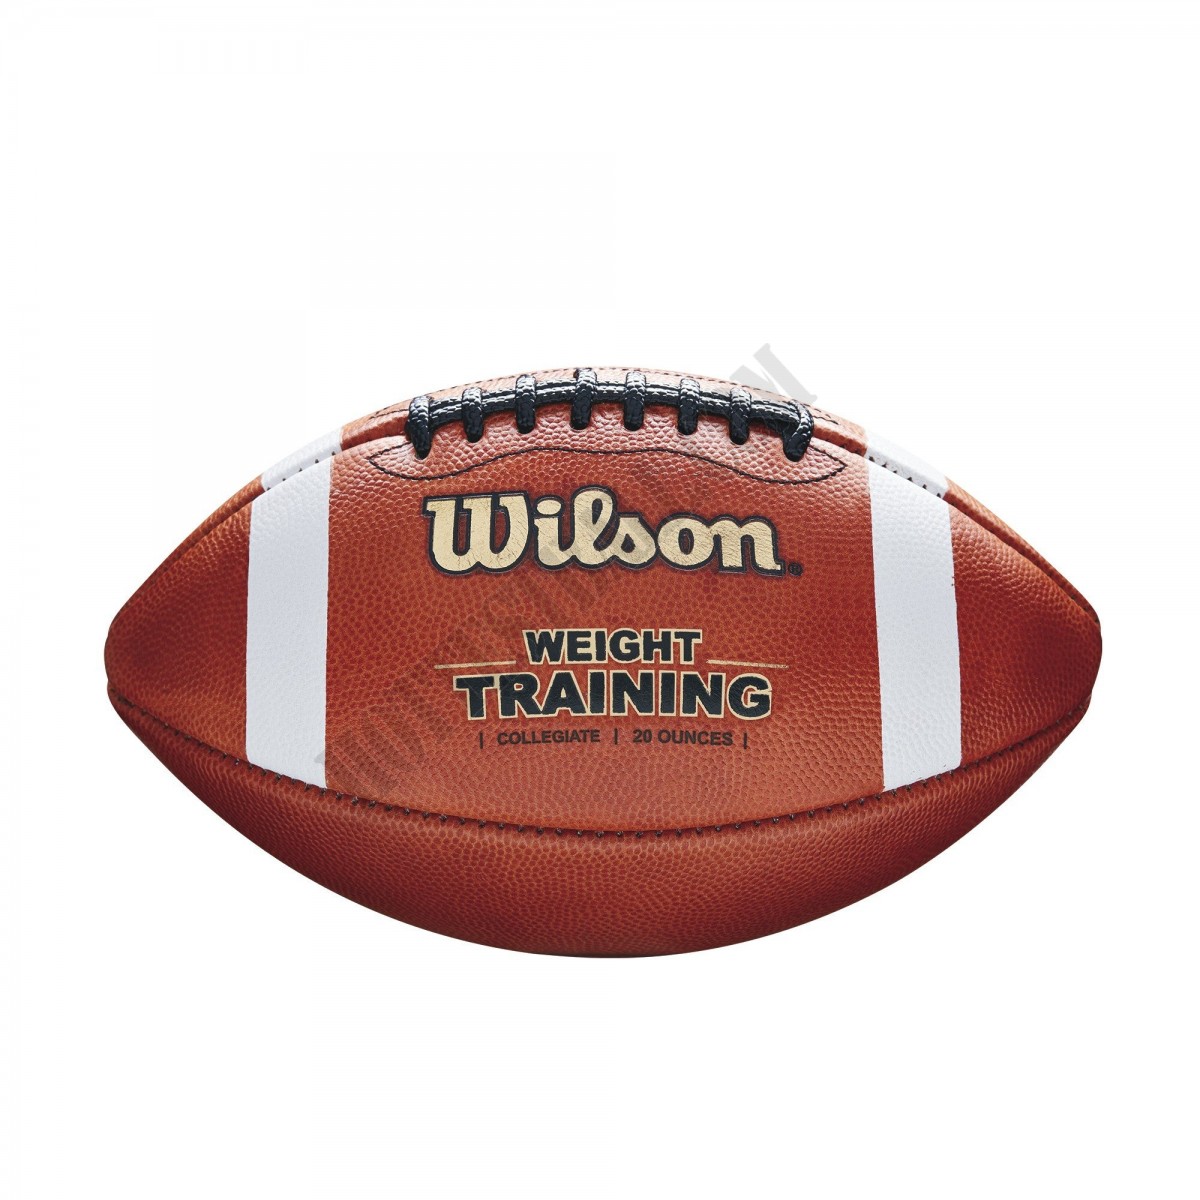 Weight Training Football - Wilson Discount Store - -0